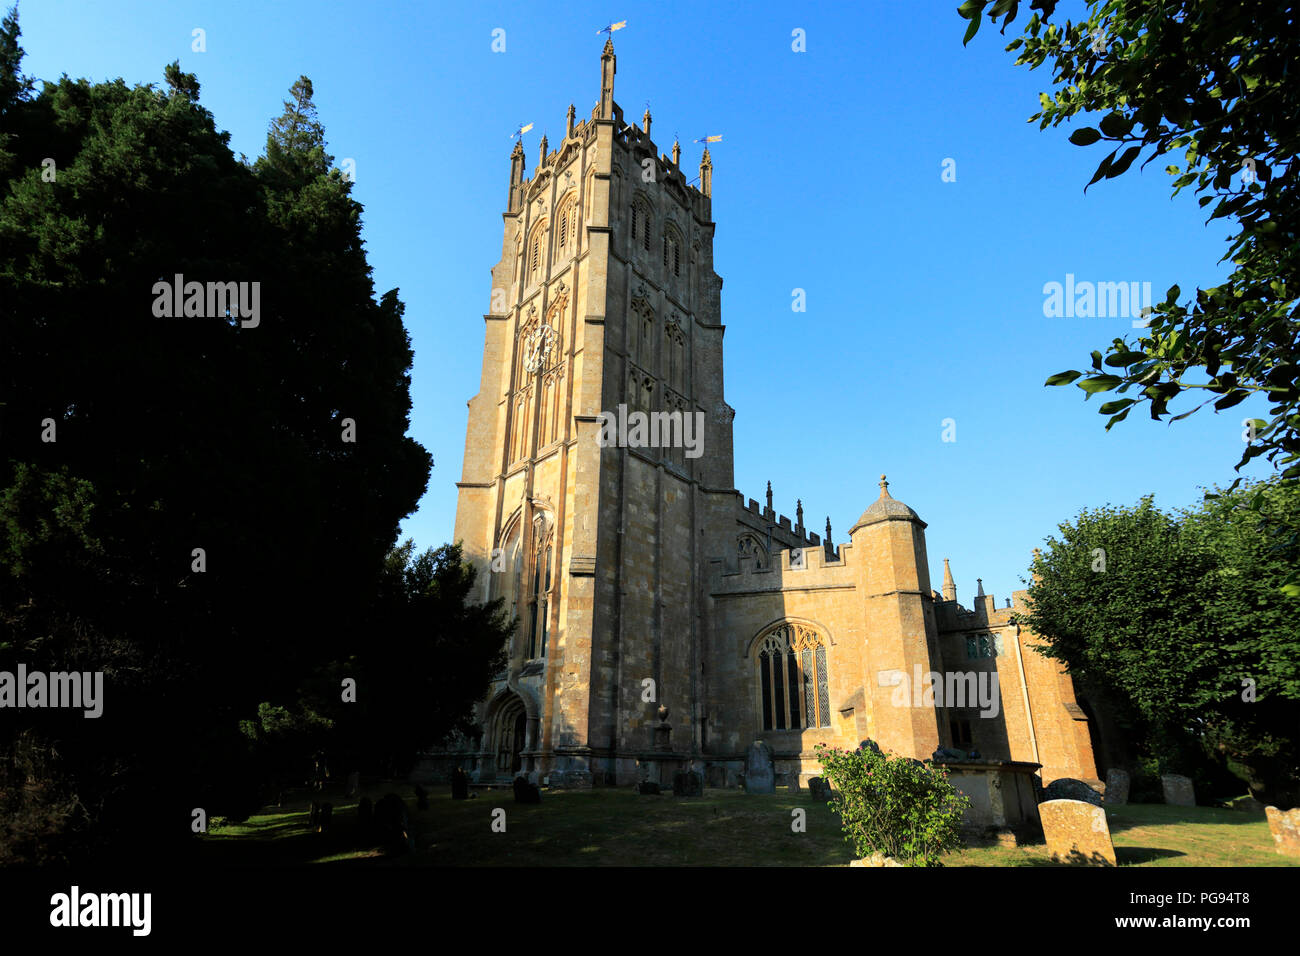 St James Parish Church, Chipping Campden Stadt, Gloucestershire Cotswolds, England, Großbritannien Stockfoto